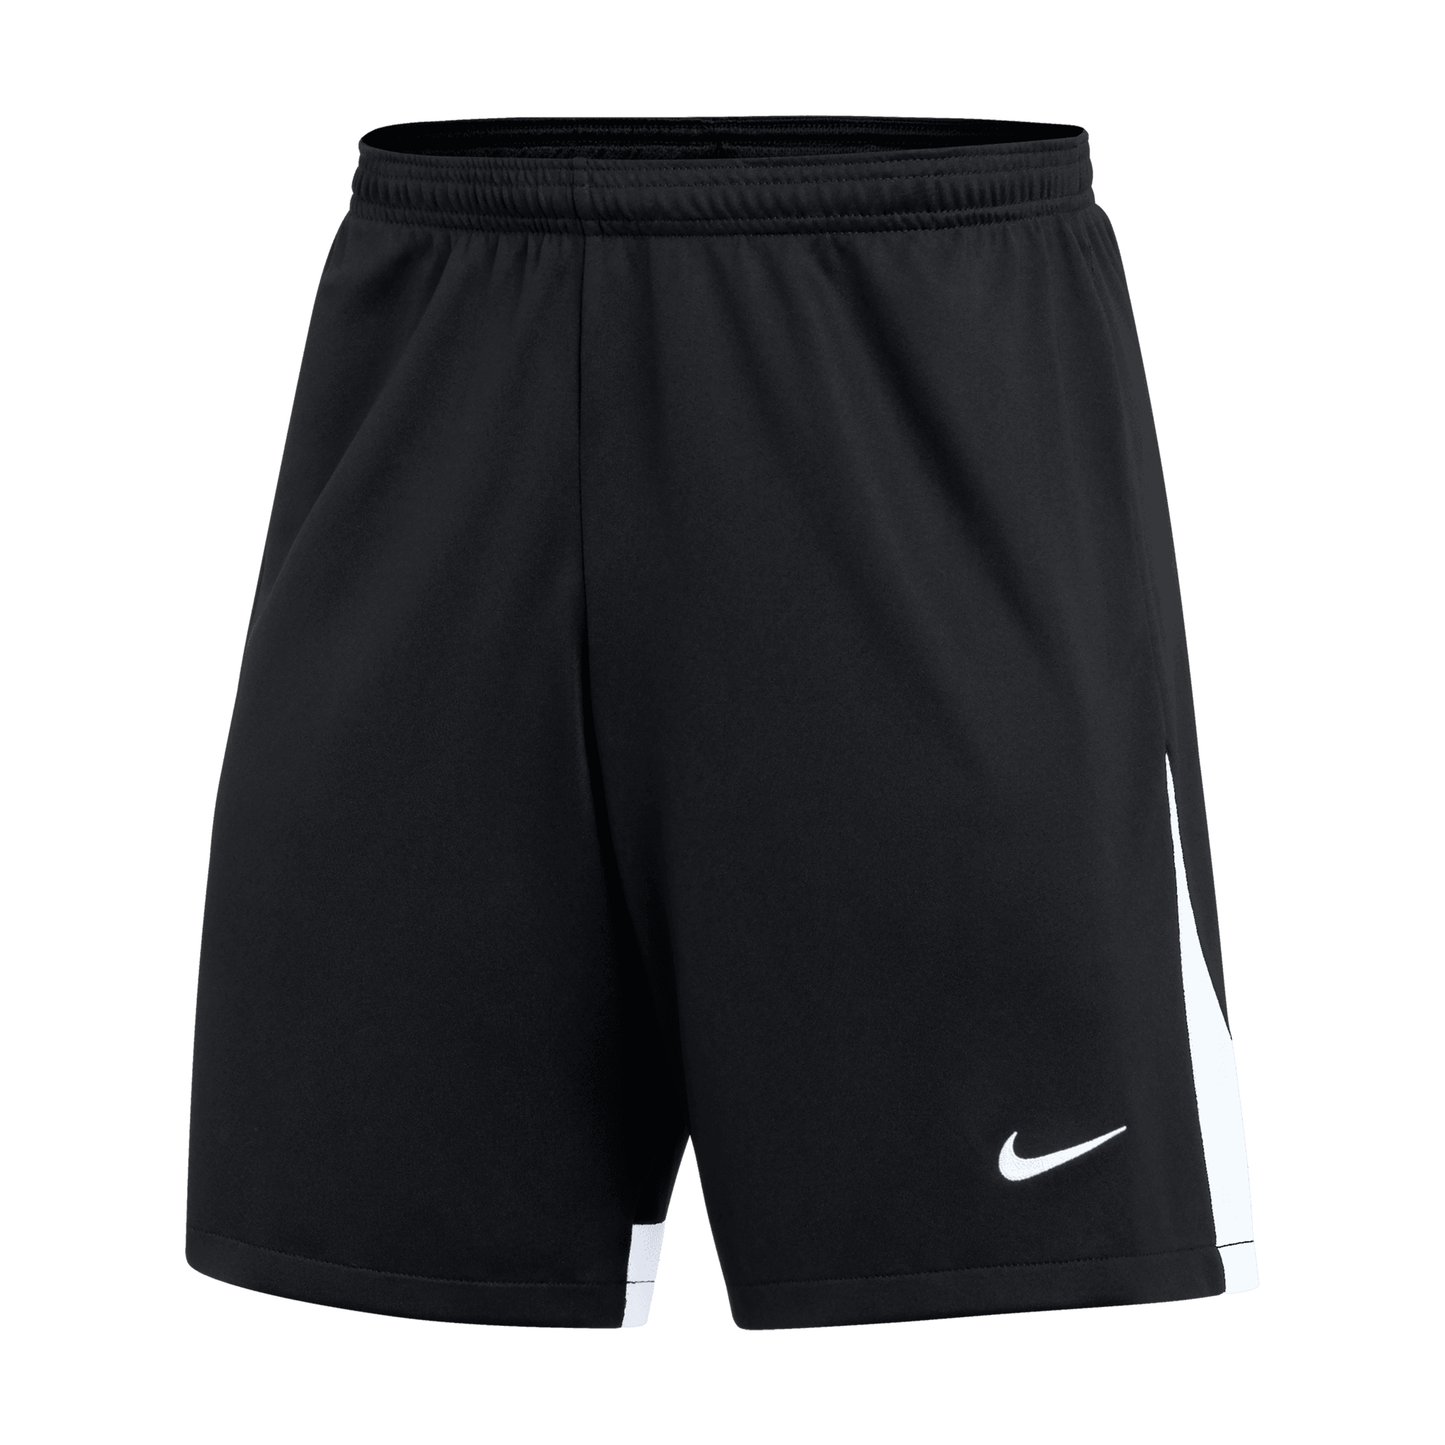 South Anchorage HS Shorts [Men's]